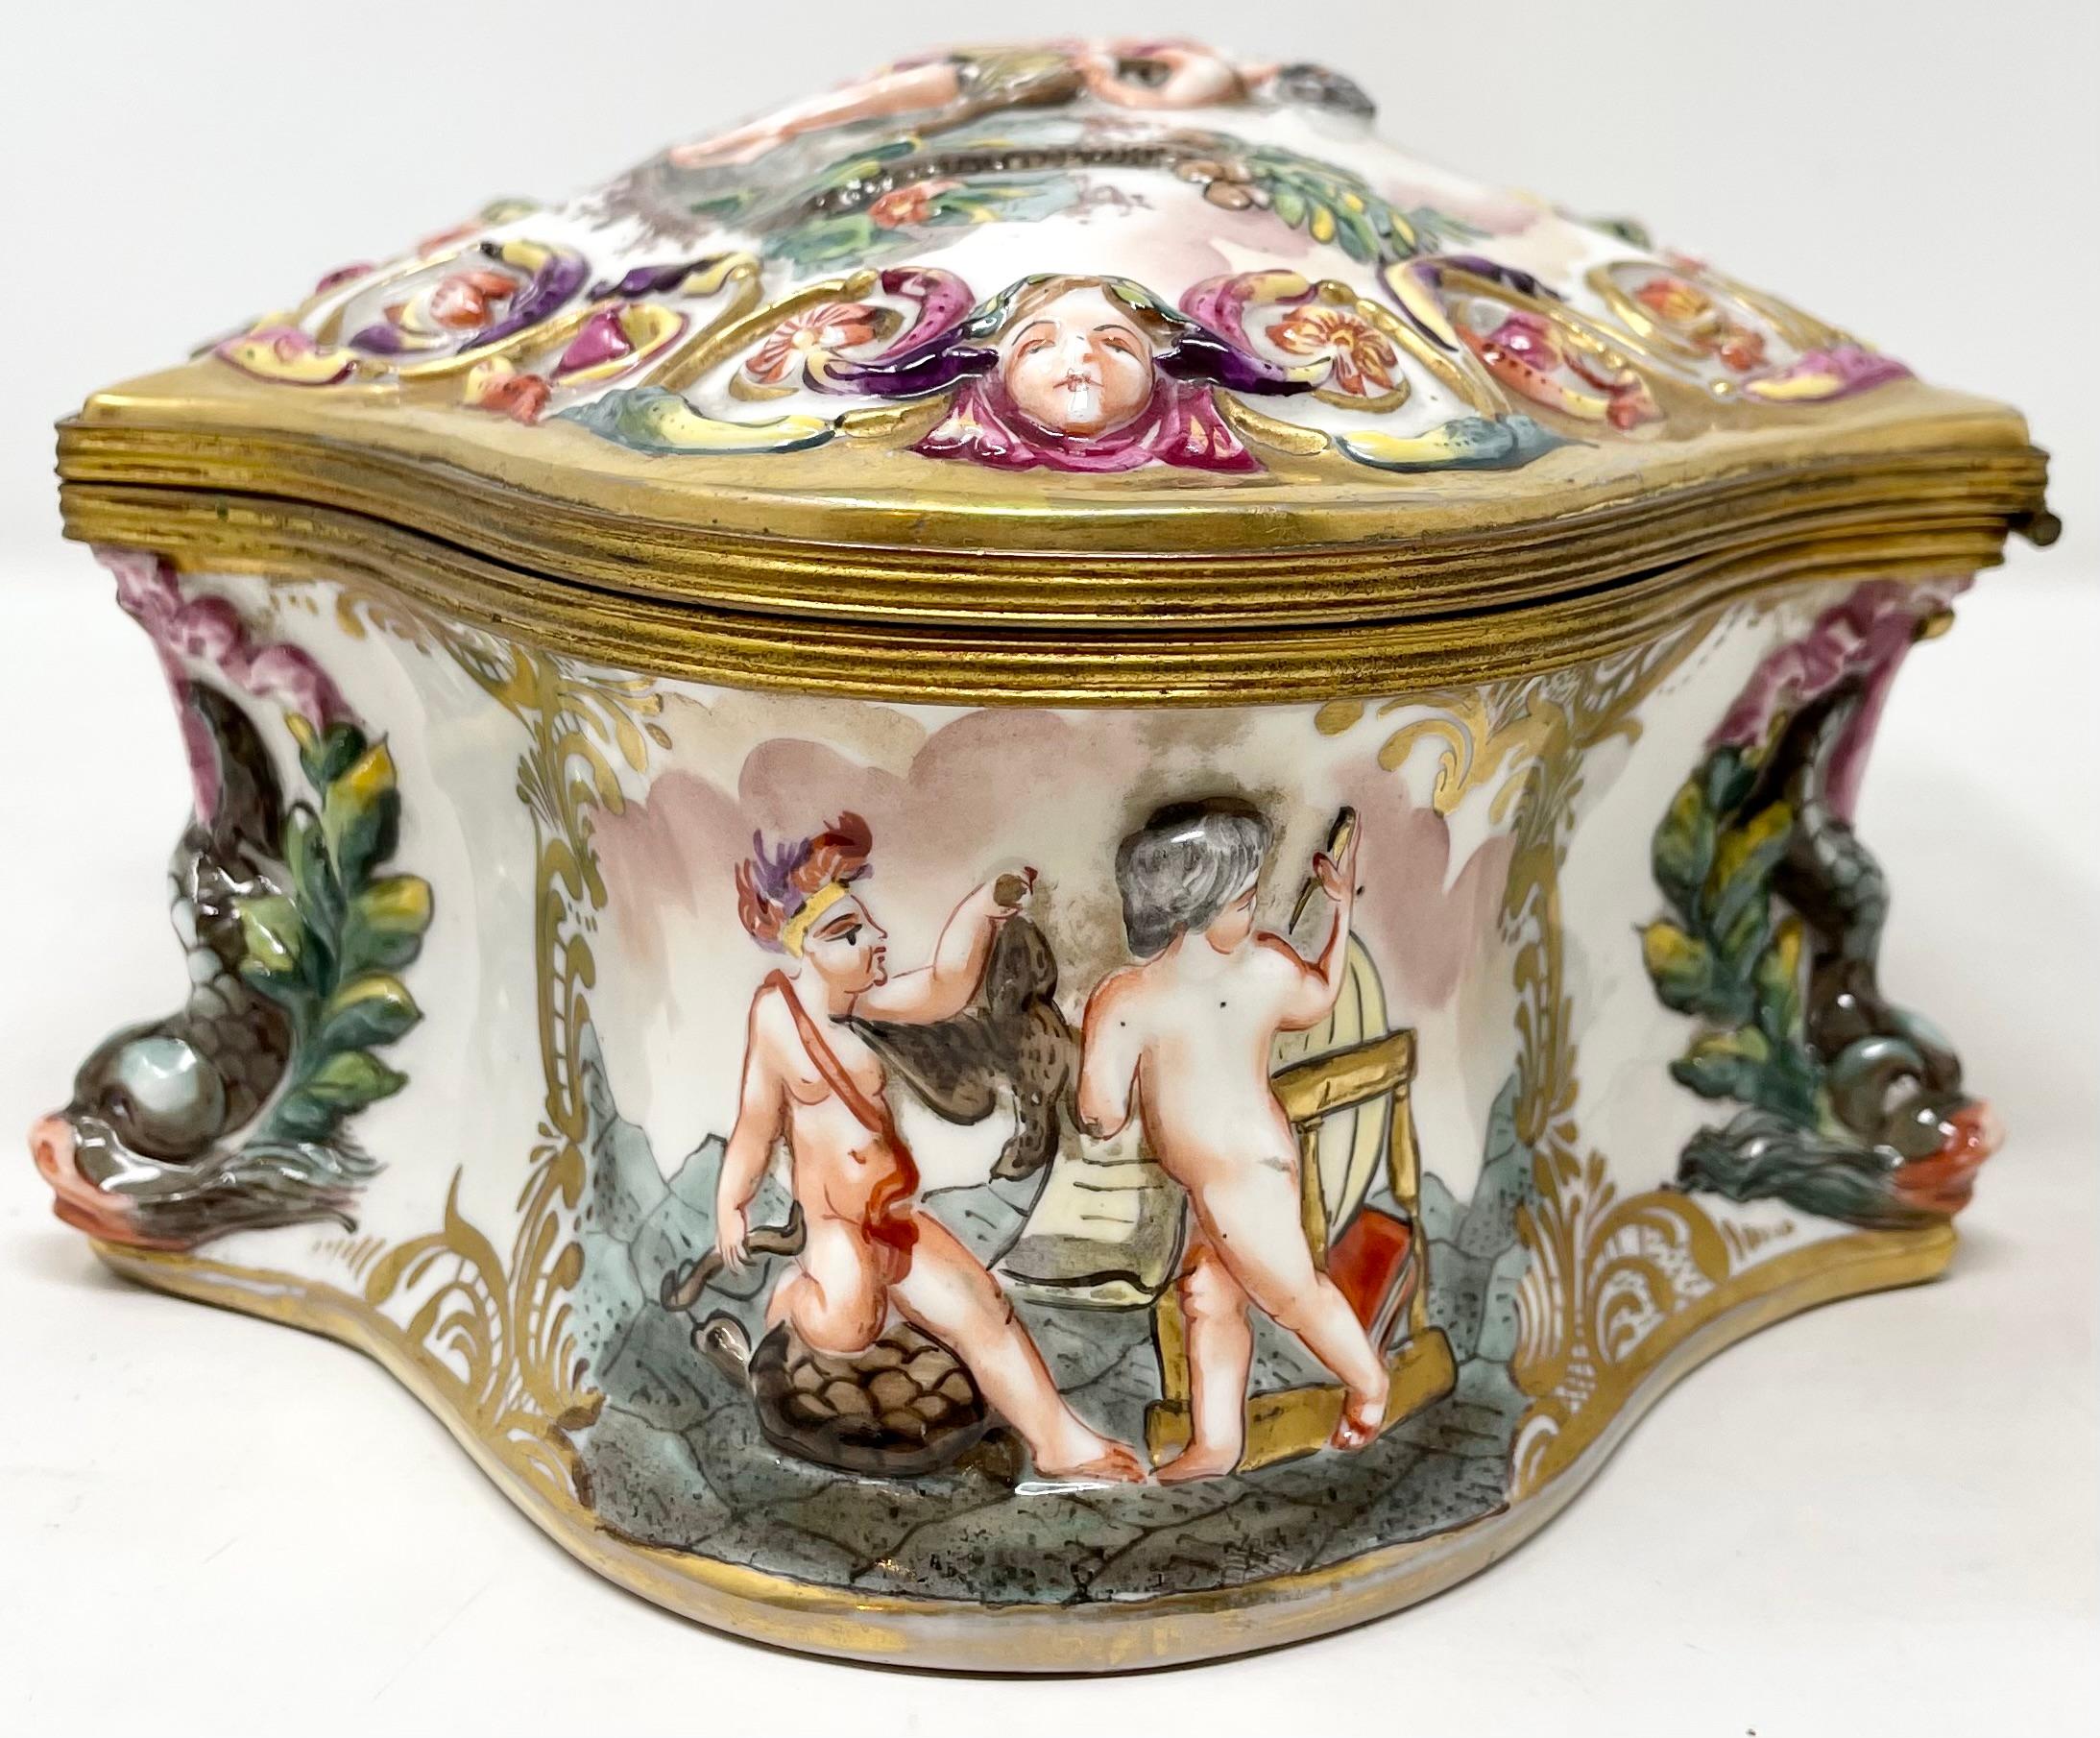 20th Century Large Antique Italian Capo di Monte Hand-Painted Porcelain Jewel Box circa 1900. For Sale